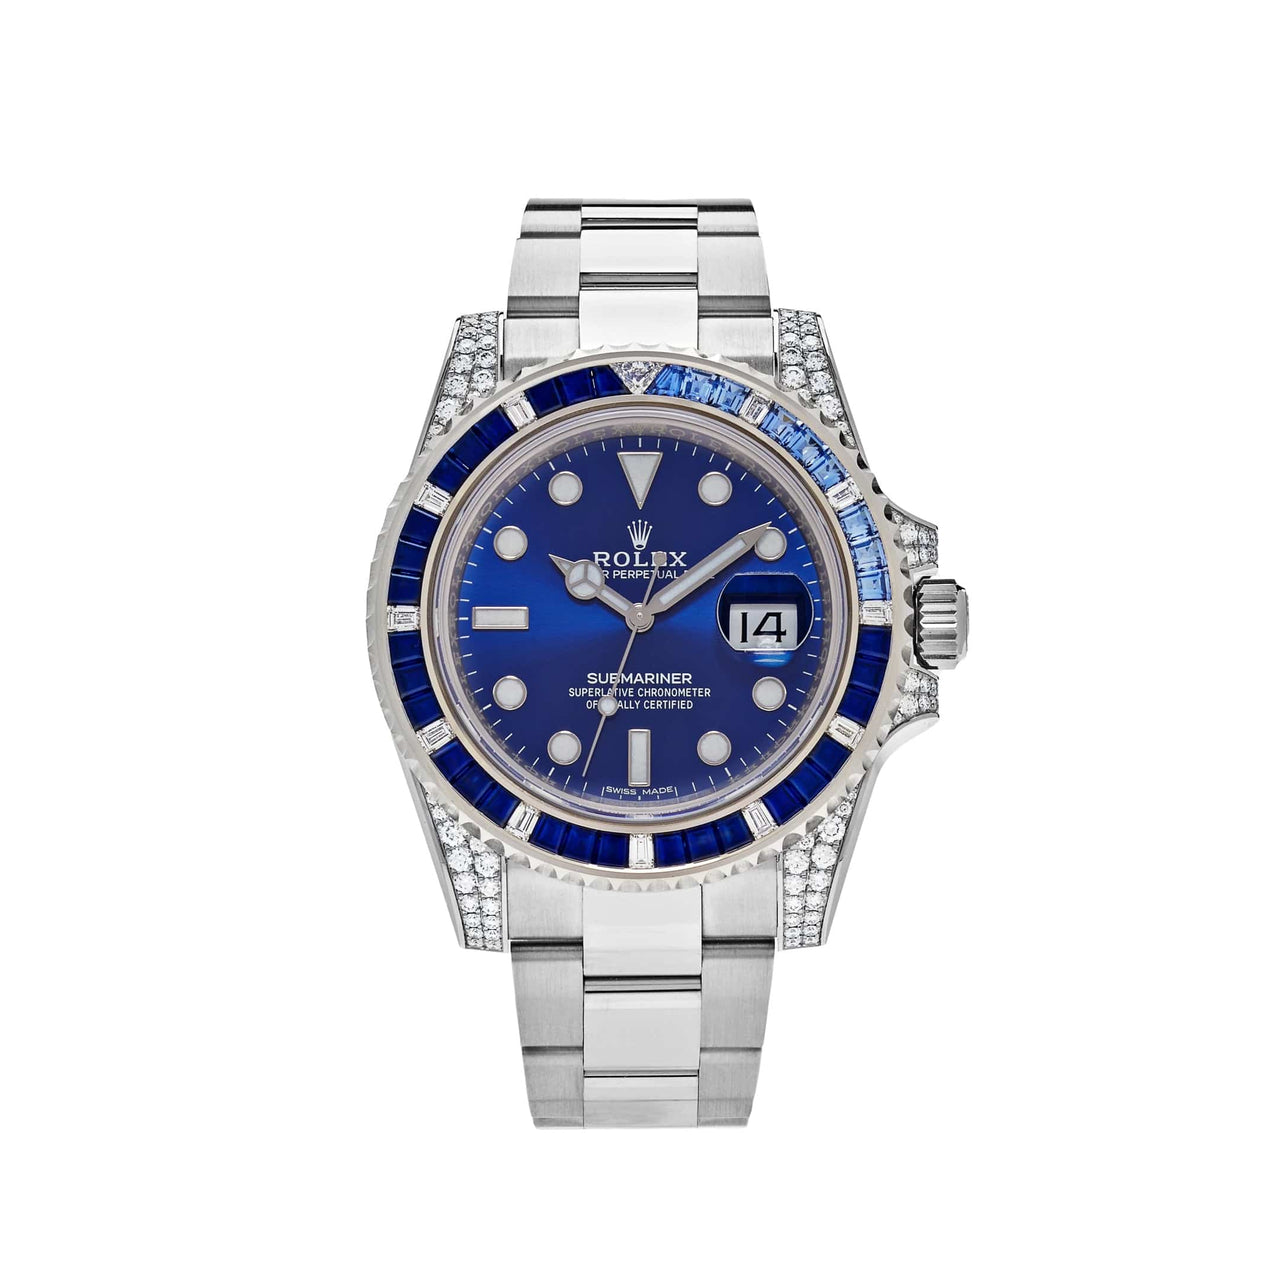 Rolex Submariner White Gold Blue Sapphire & Diamond Dial & Bezel 116659SABR wrist aficionado